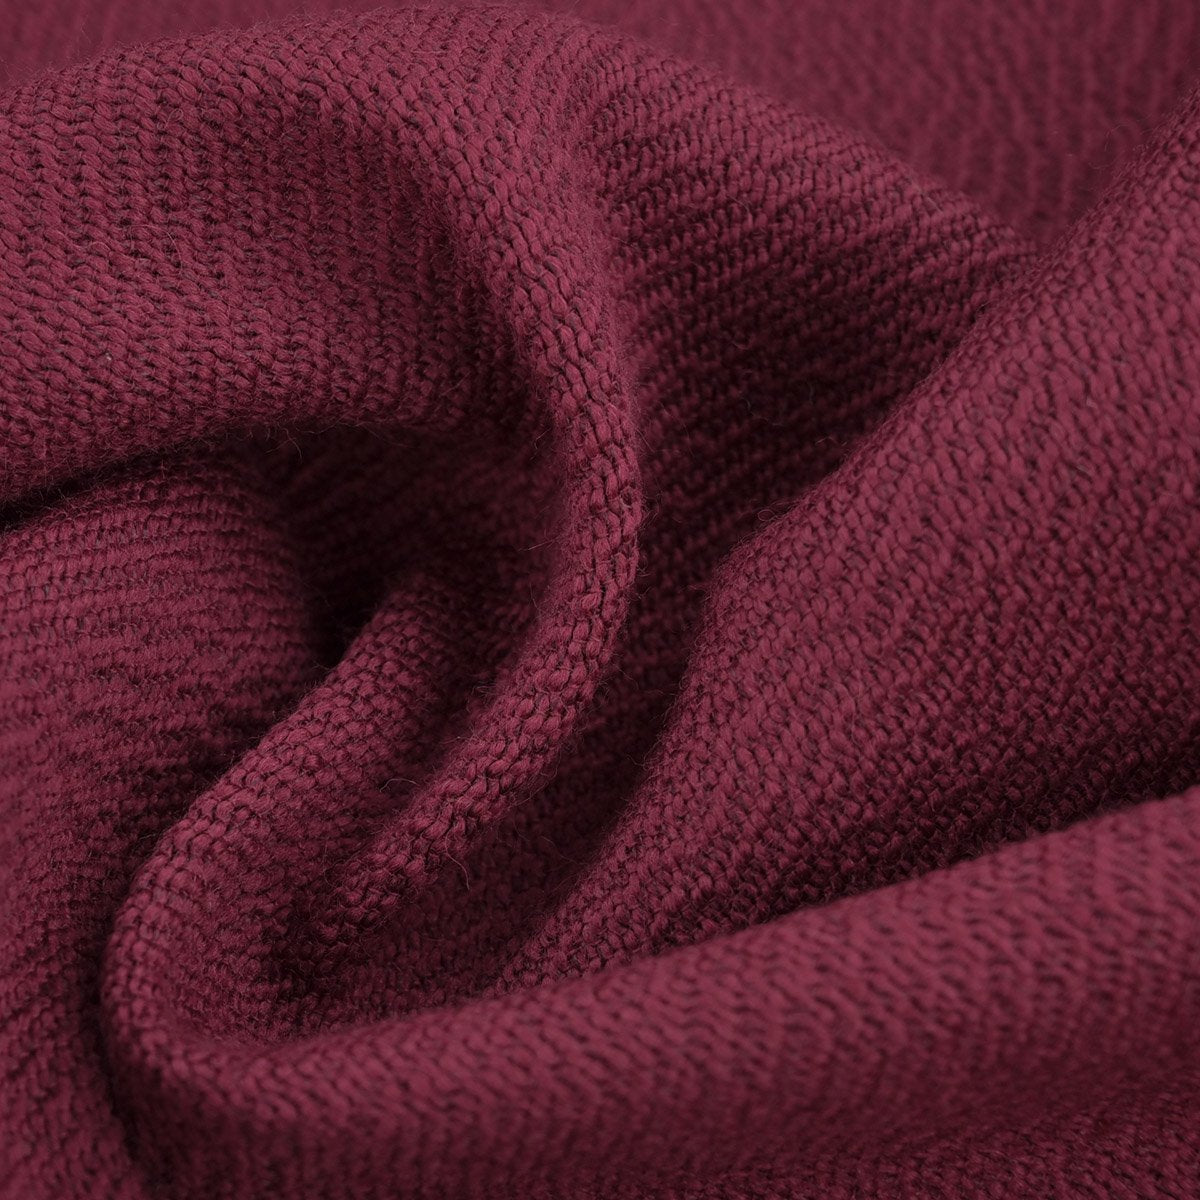 Burgundy Bouclé Fabric 96871